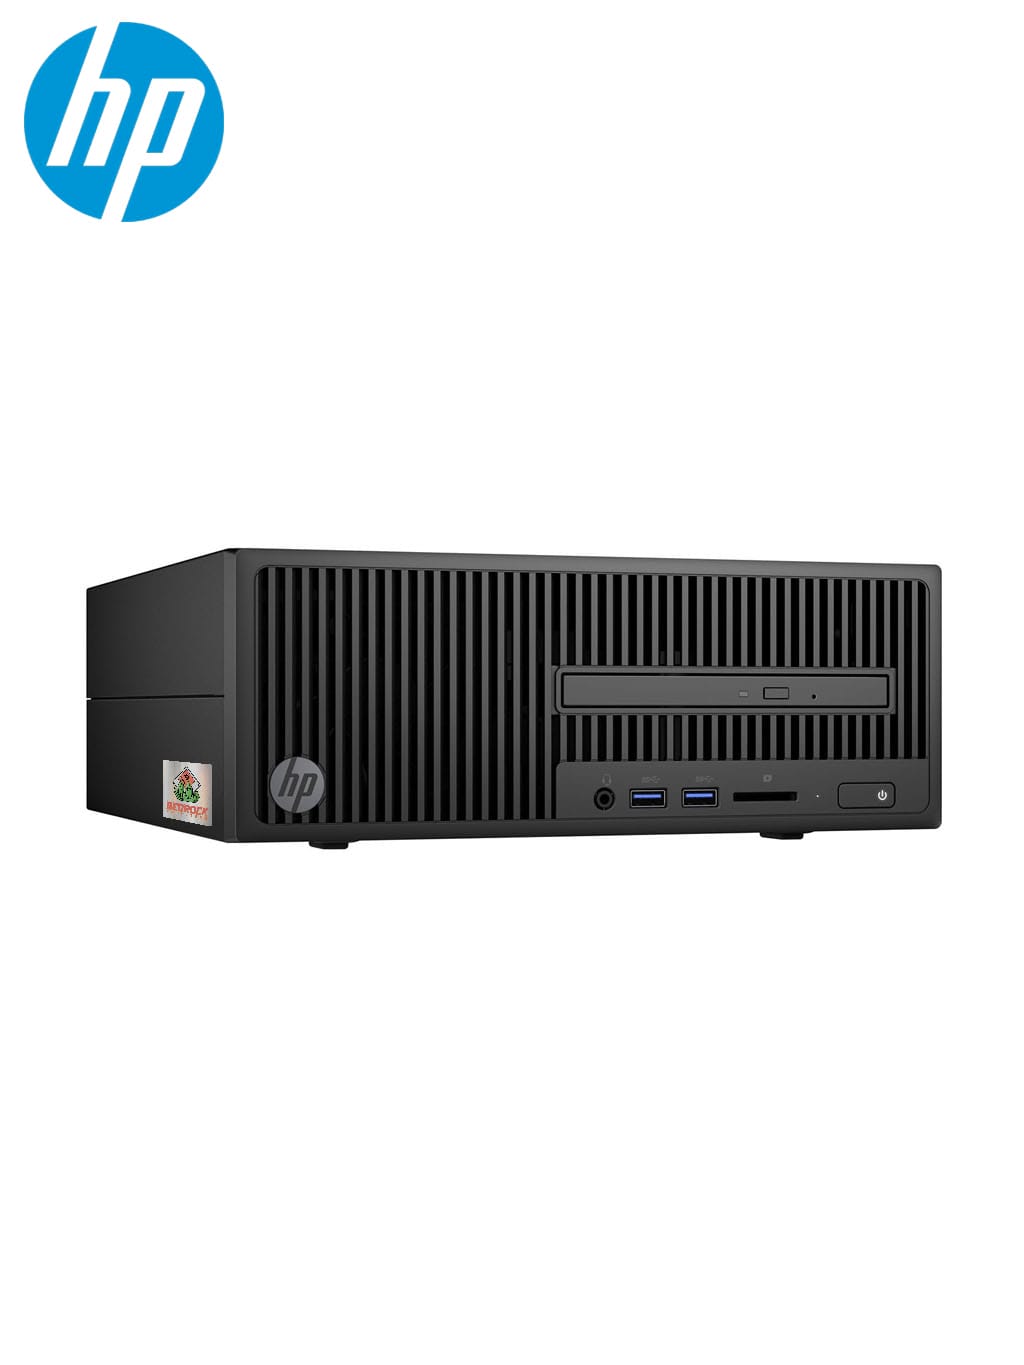 HP 280 G4 SFF Business PC – i5 8500 6 Core, 16GB RAM, 1TB HDD, Wi-Fi, Windows